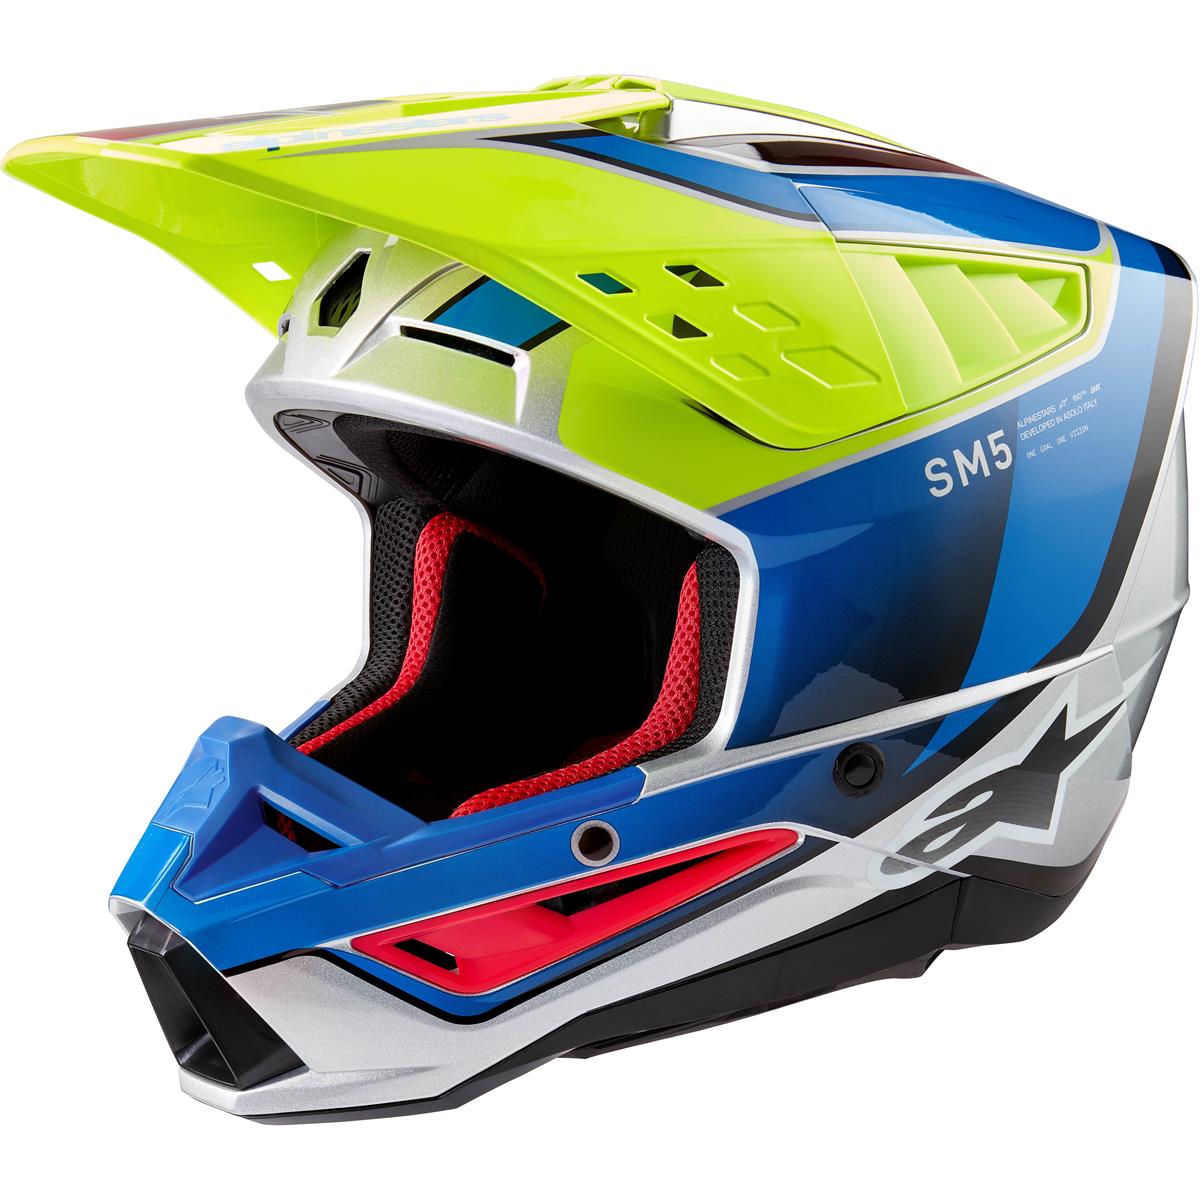 Alpinestars MX Helmet S-M5 Sail - Flo Yellow/Blue/Silver/Glossy